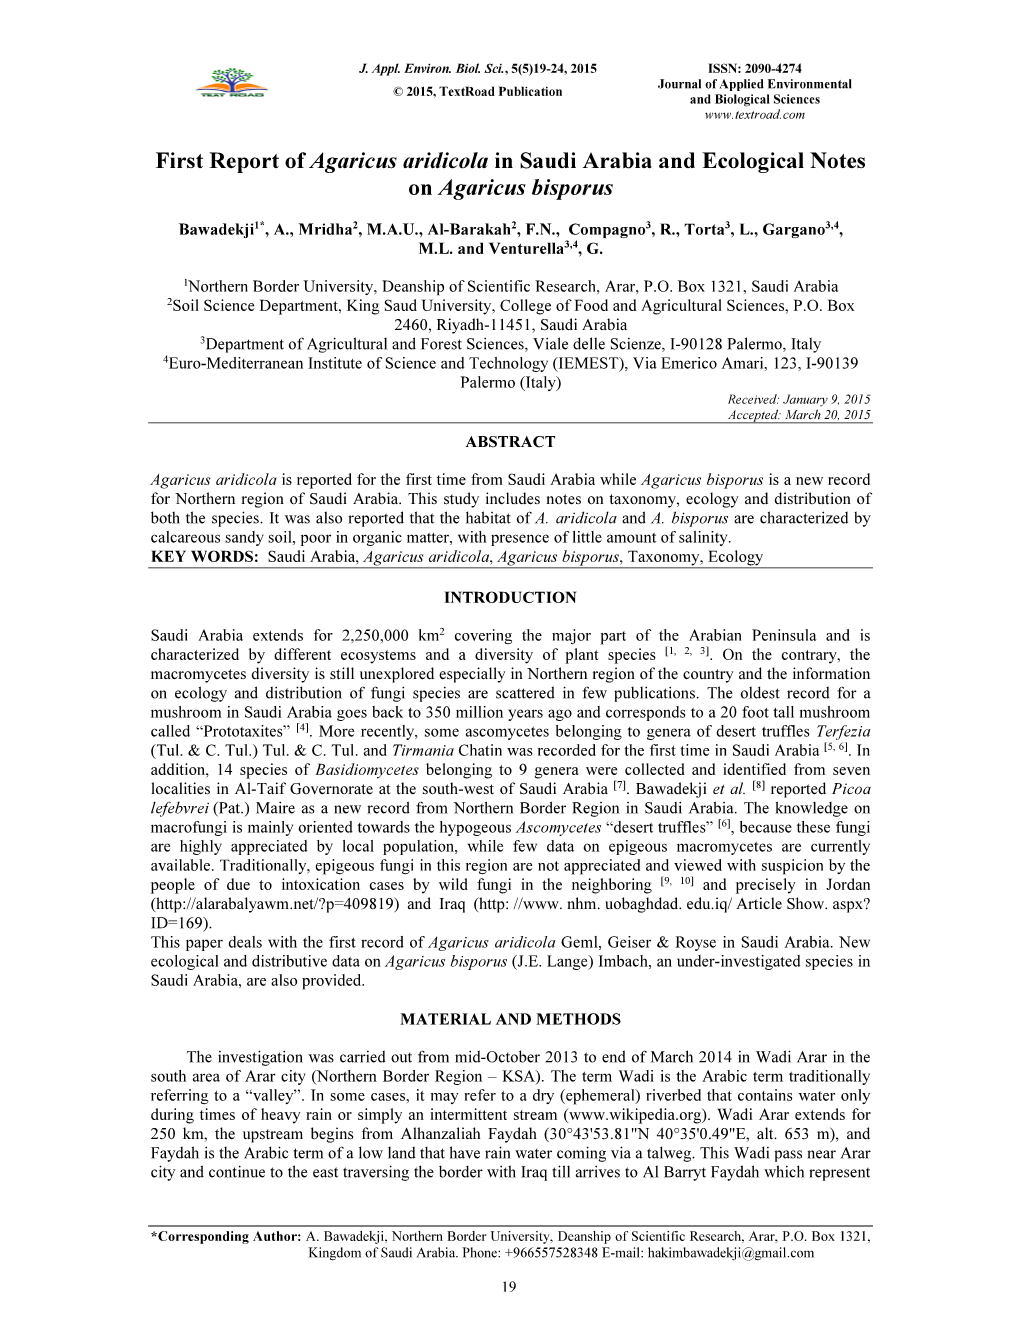 First Report of Agaricus Aridicola in Saudi Arabia and Ecological Notes on Agaricus Bisporus